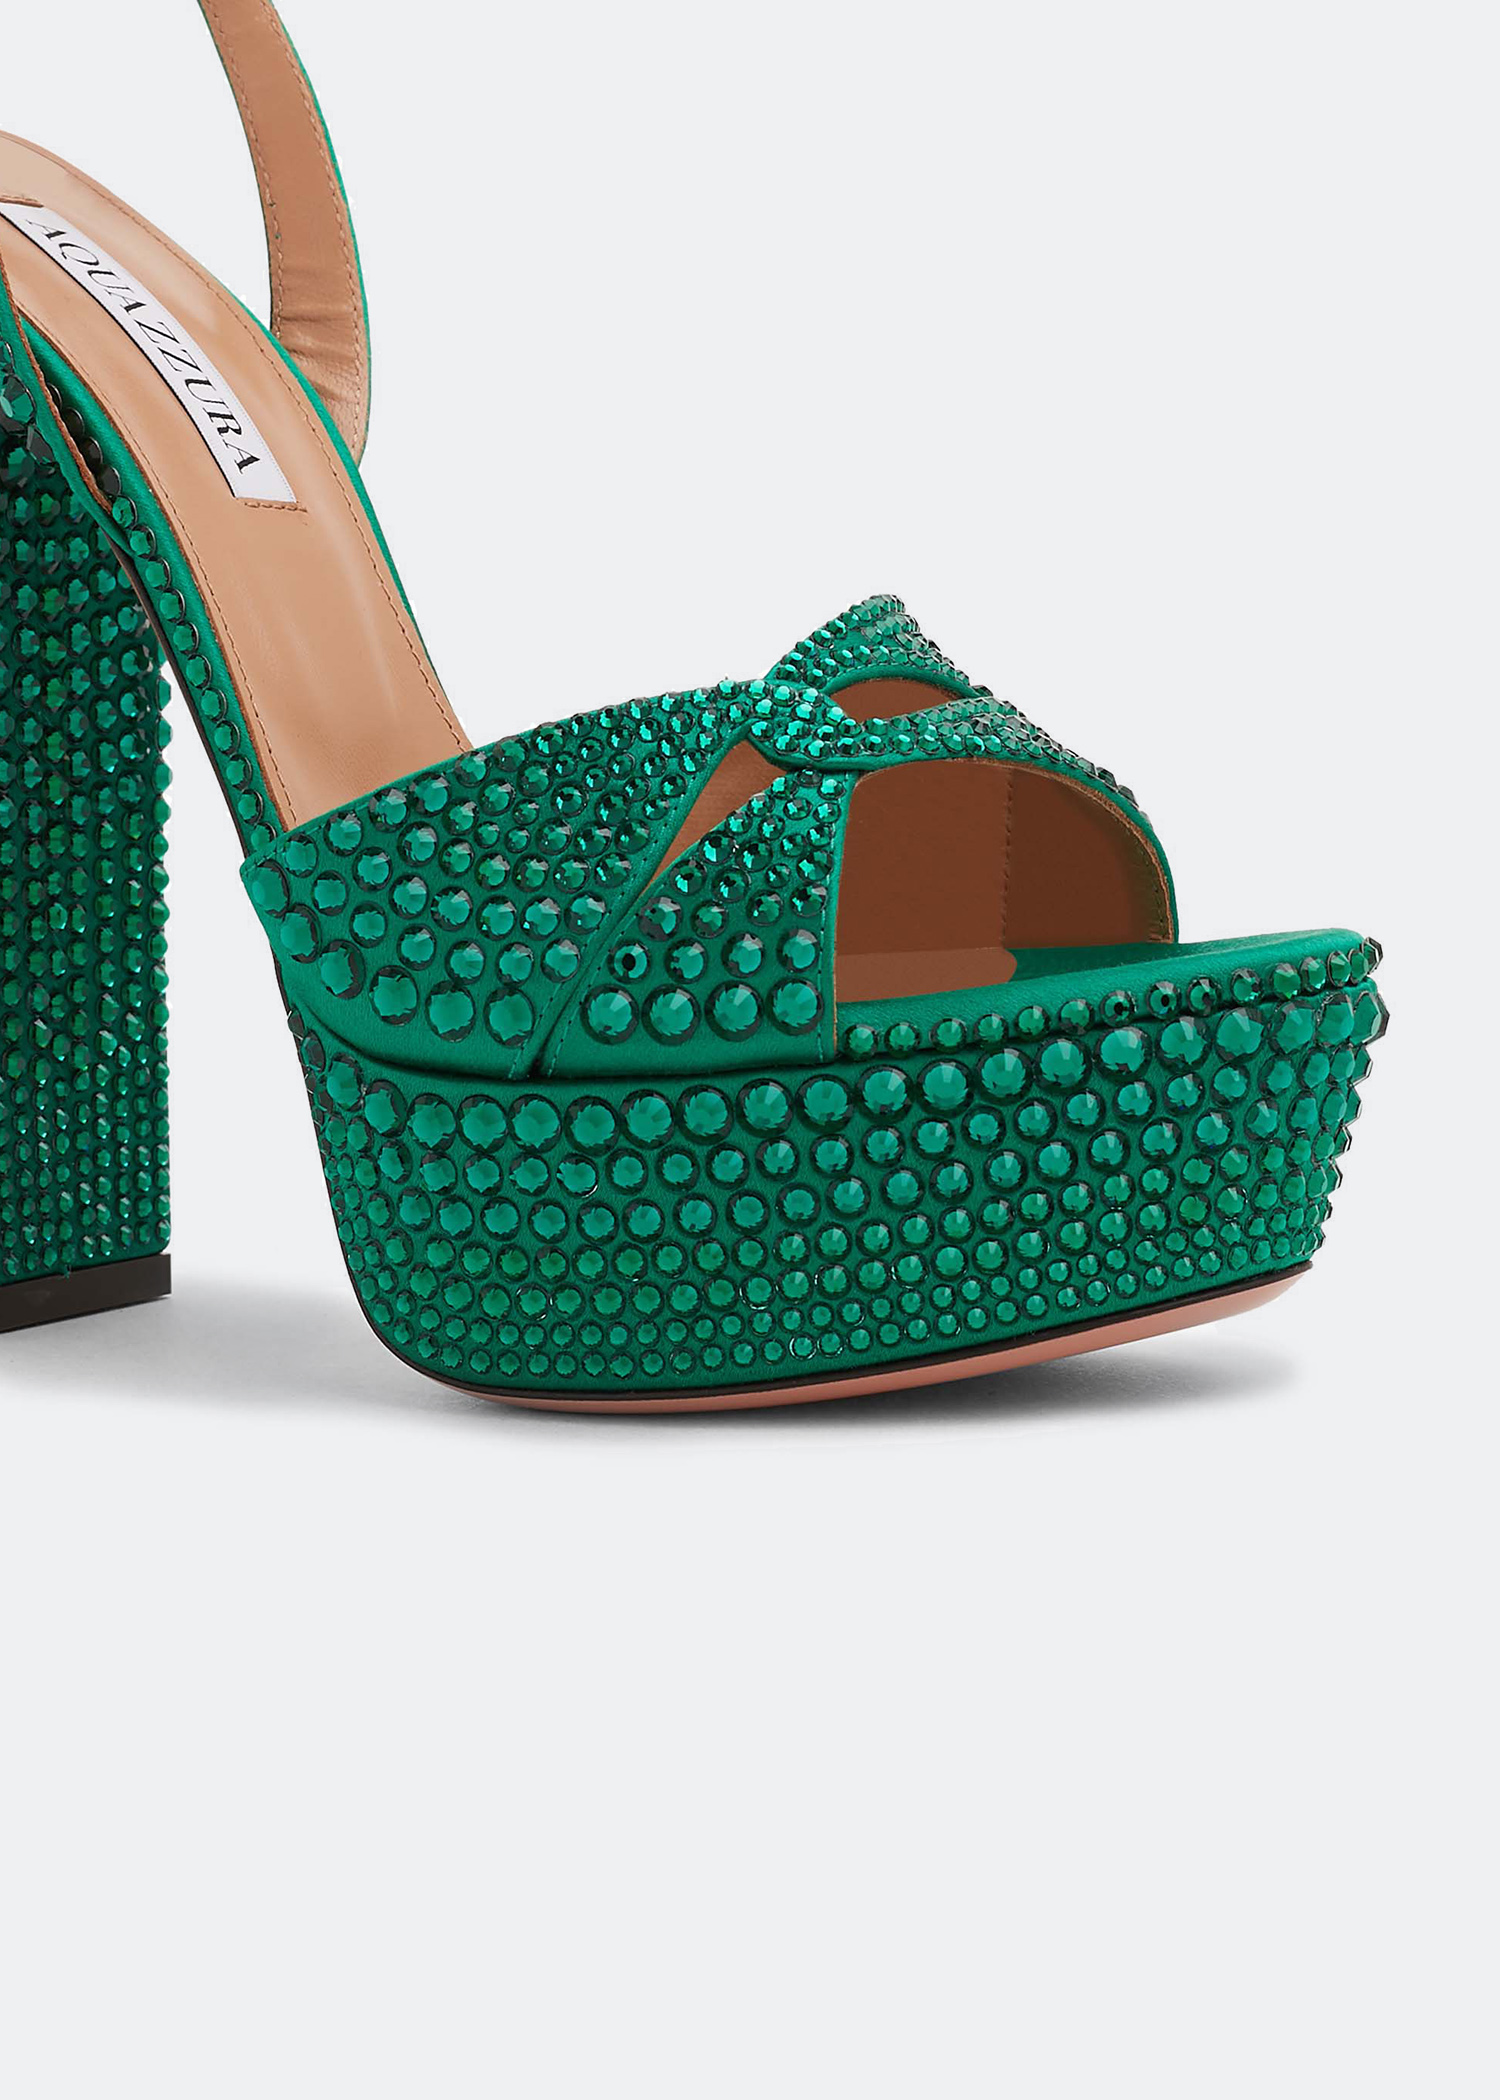 Aquazzura Sinner Plateau 140 sandals for Women - Green in KSA 